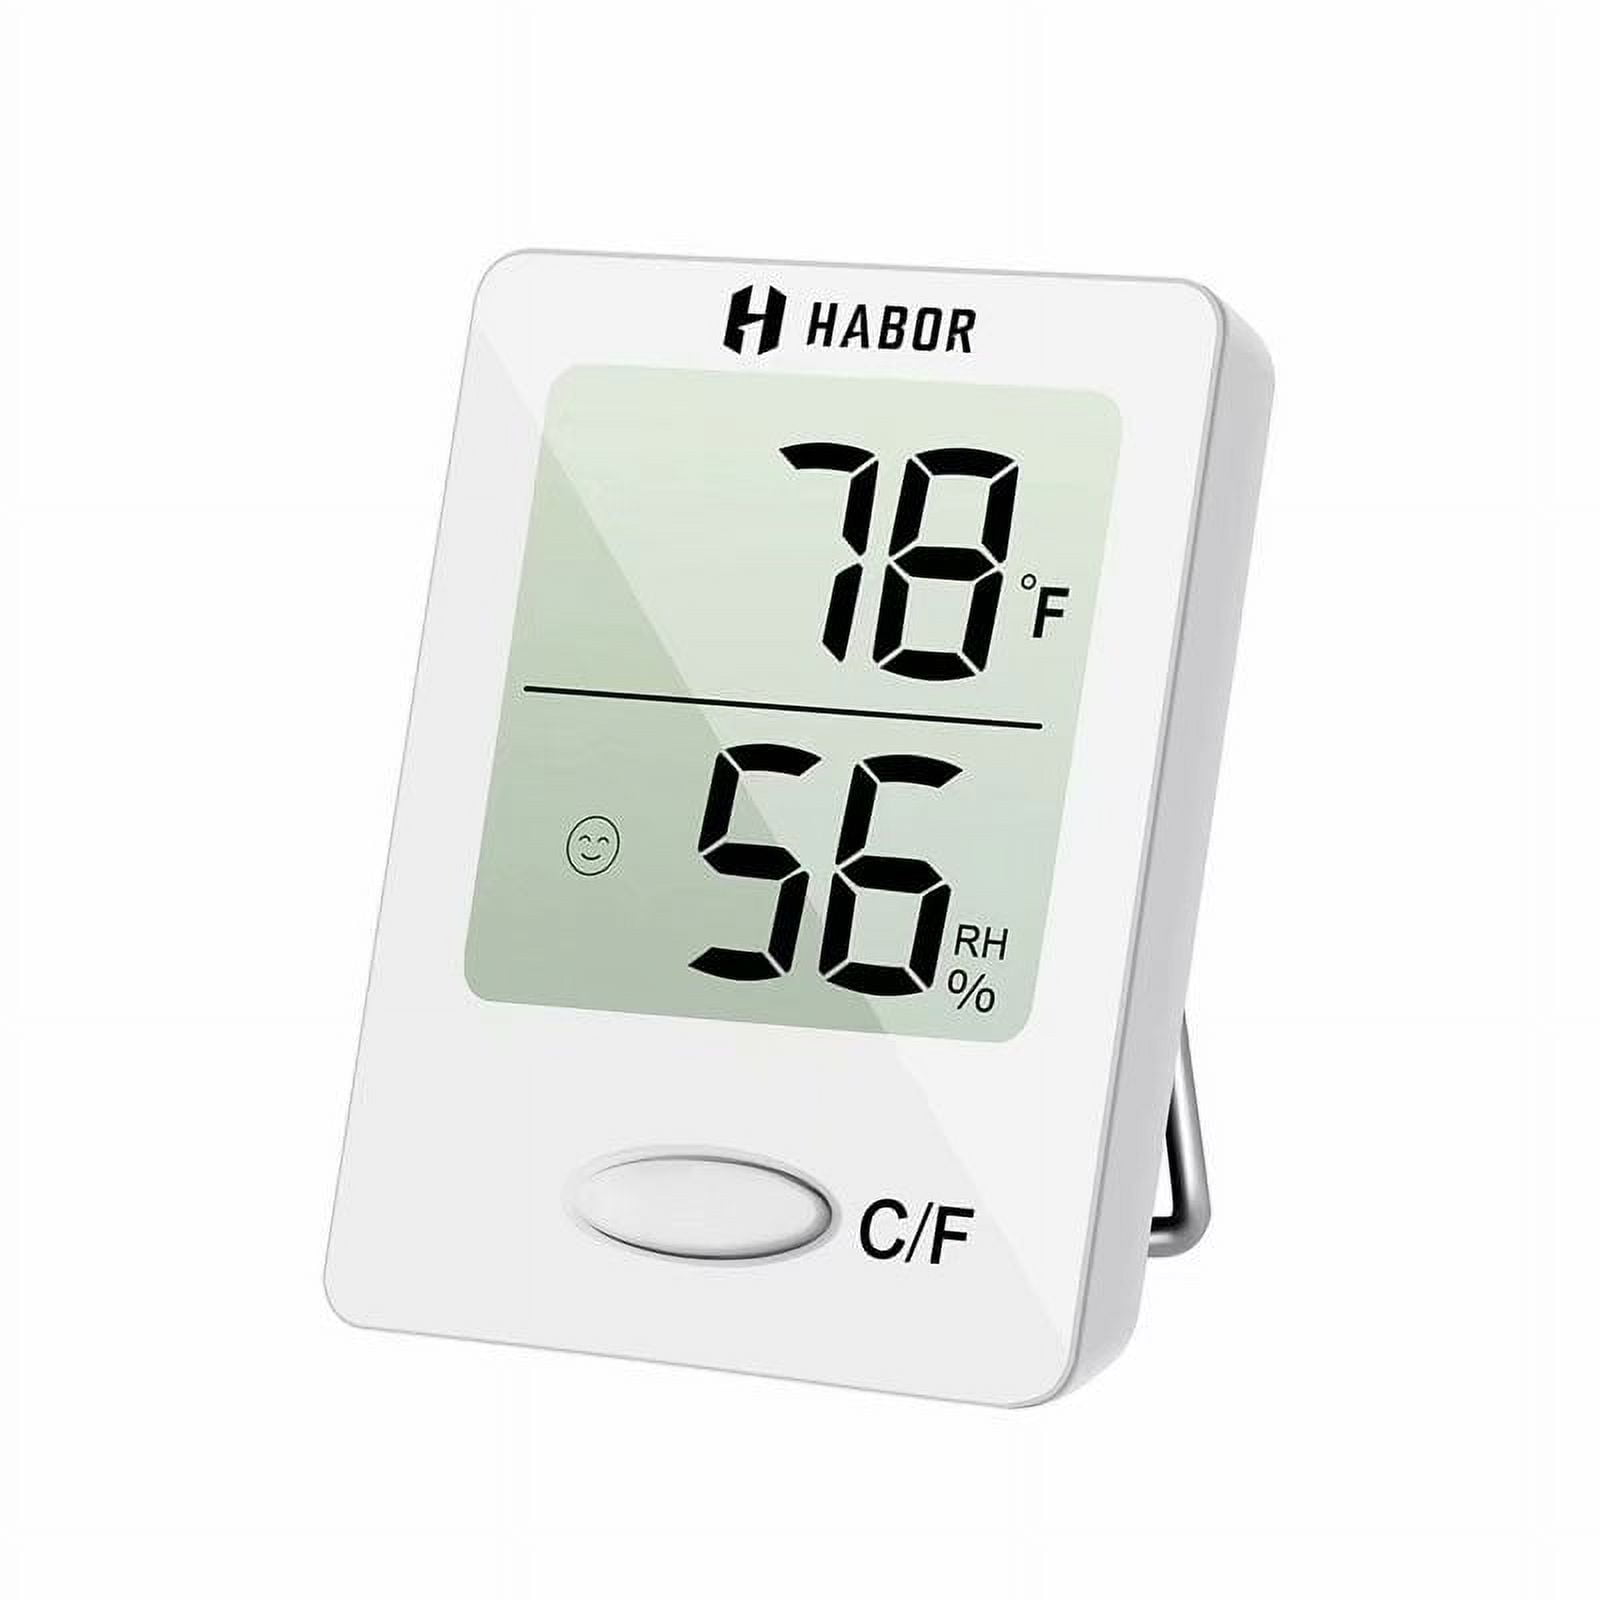 Habor Digital Hygrometer Indoor Thermometer, Humidity Gauge